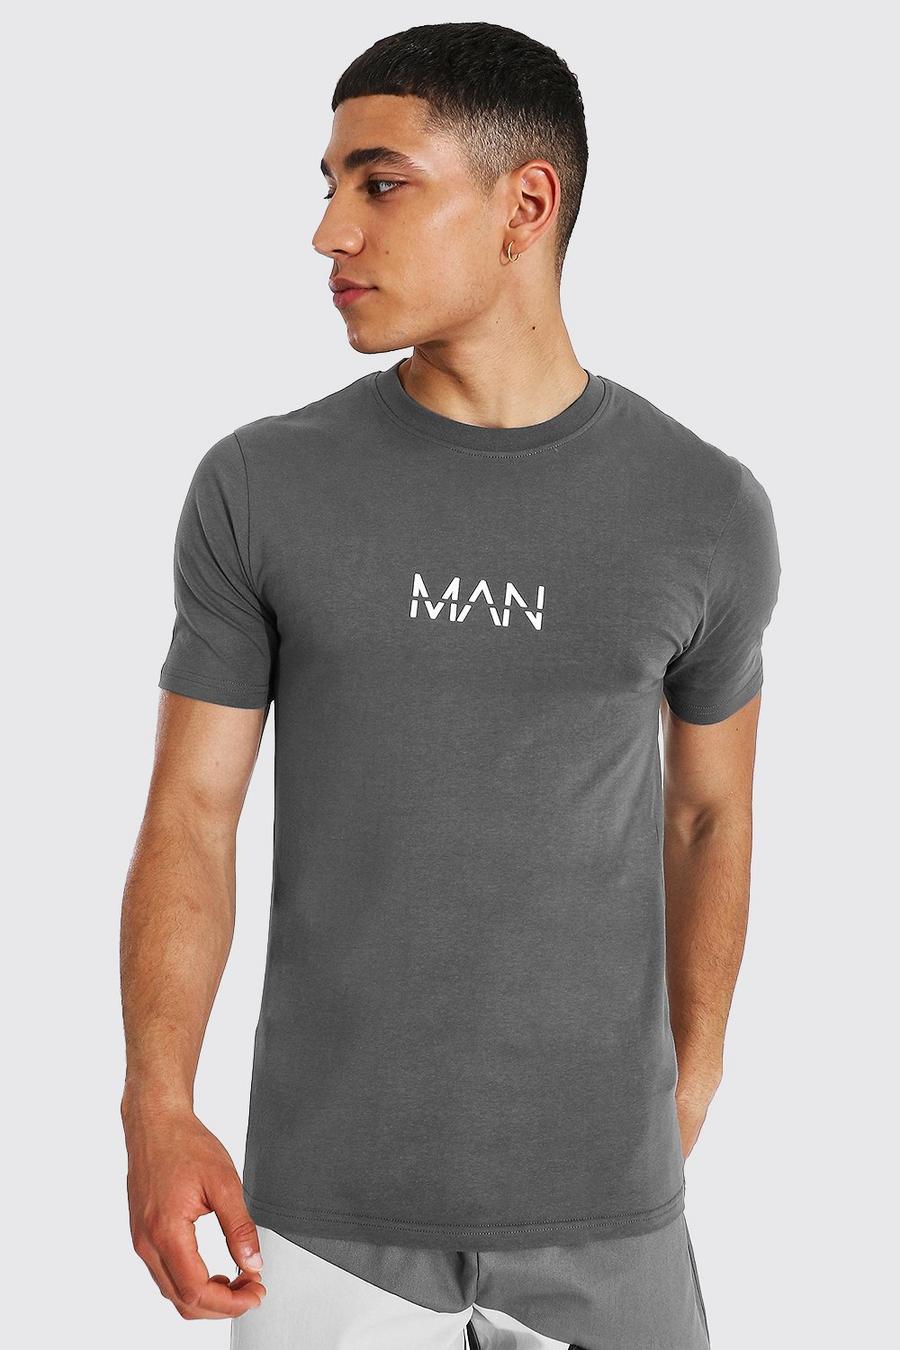 Charcoal gris Muscle Fit Original Man T-shirt image number 1